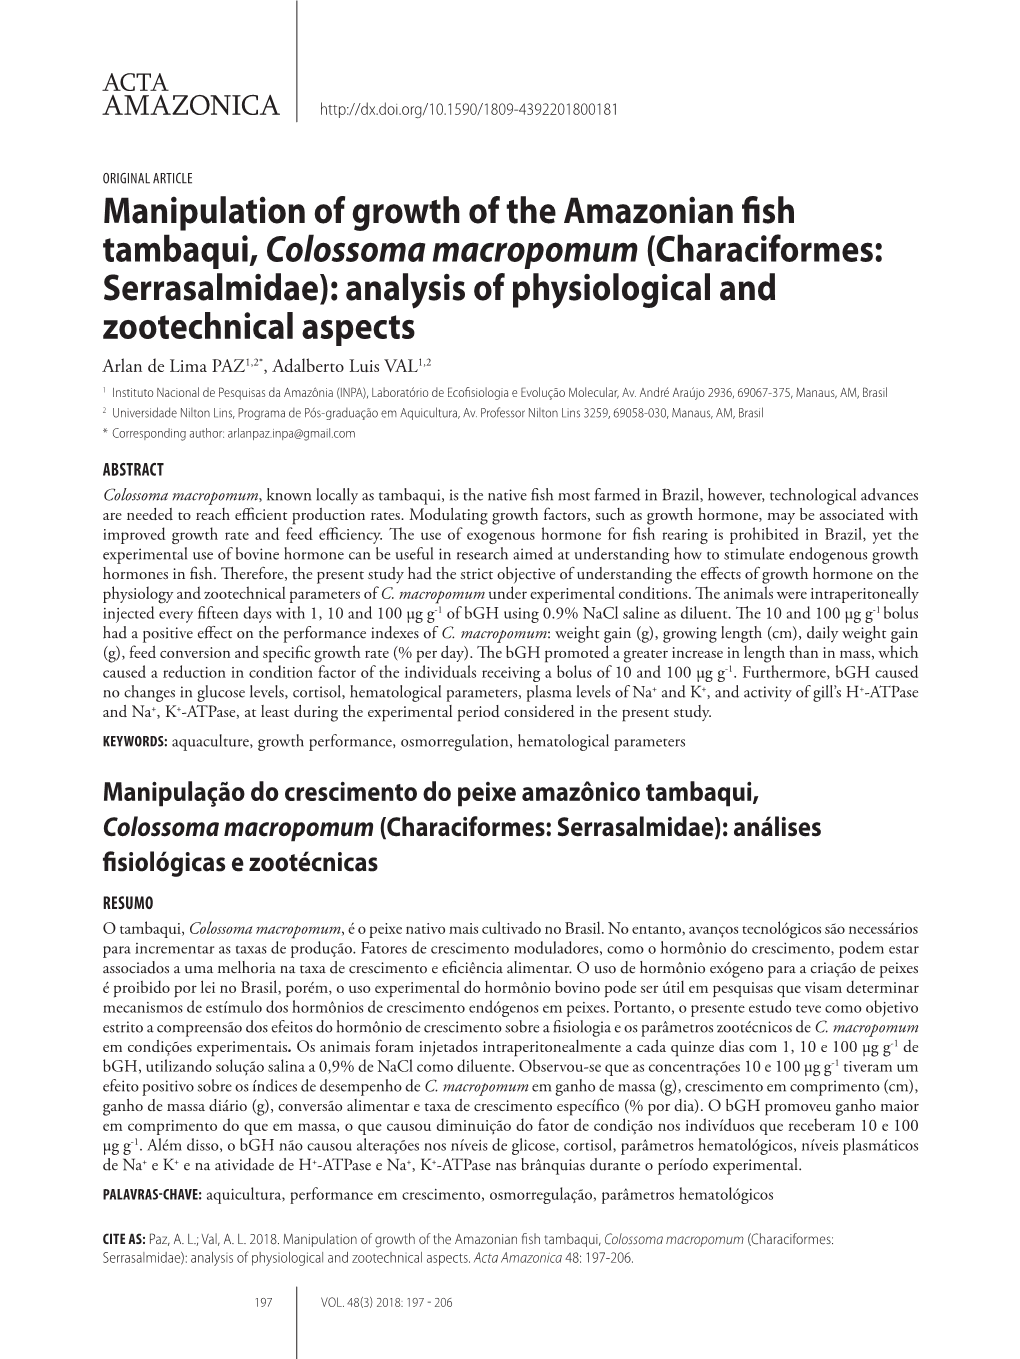 Manipulation of Growth of the Amazonian Fish Tambaqui